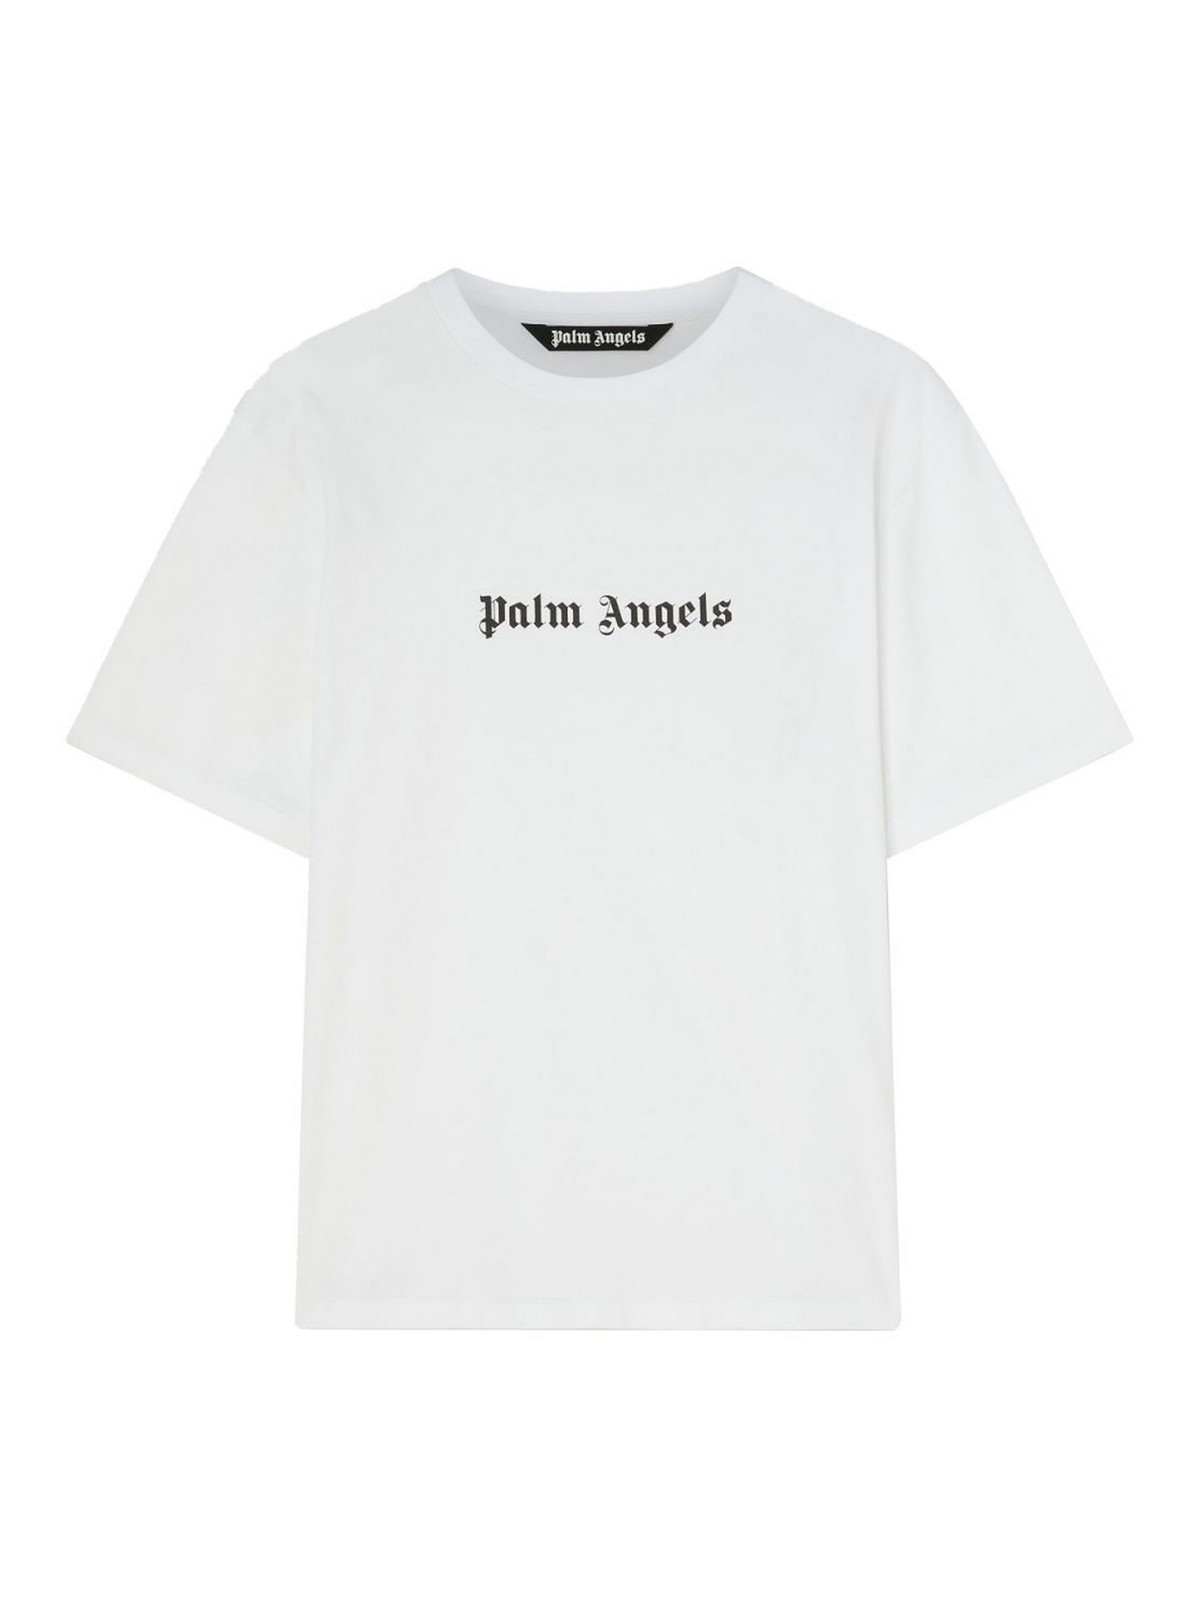 Palm angels t-shirt s white